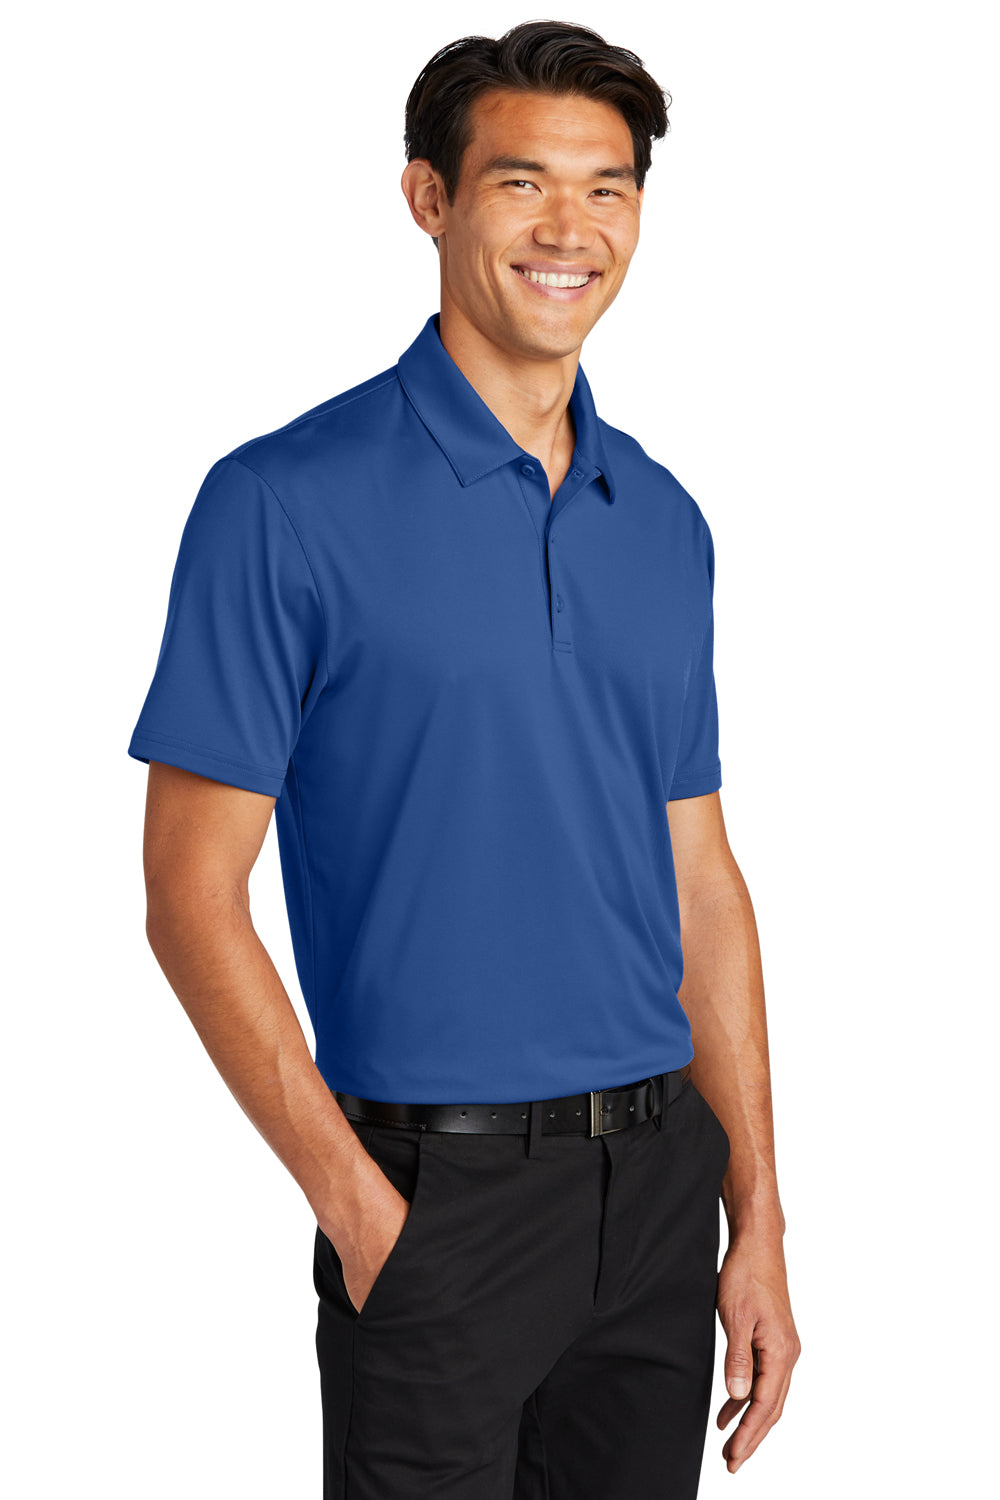 Port Authority K398 Staff Performance Short Sleeve Polo Shirt True Blue 3Q